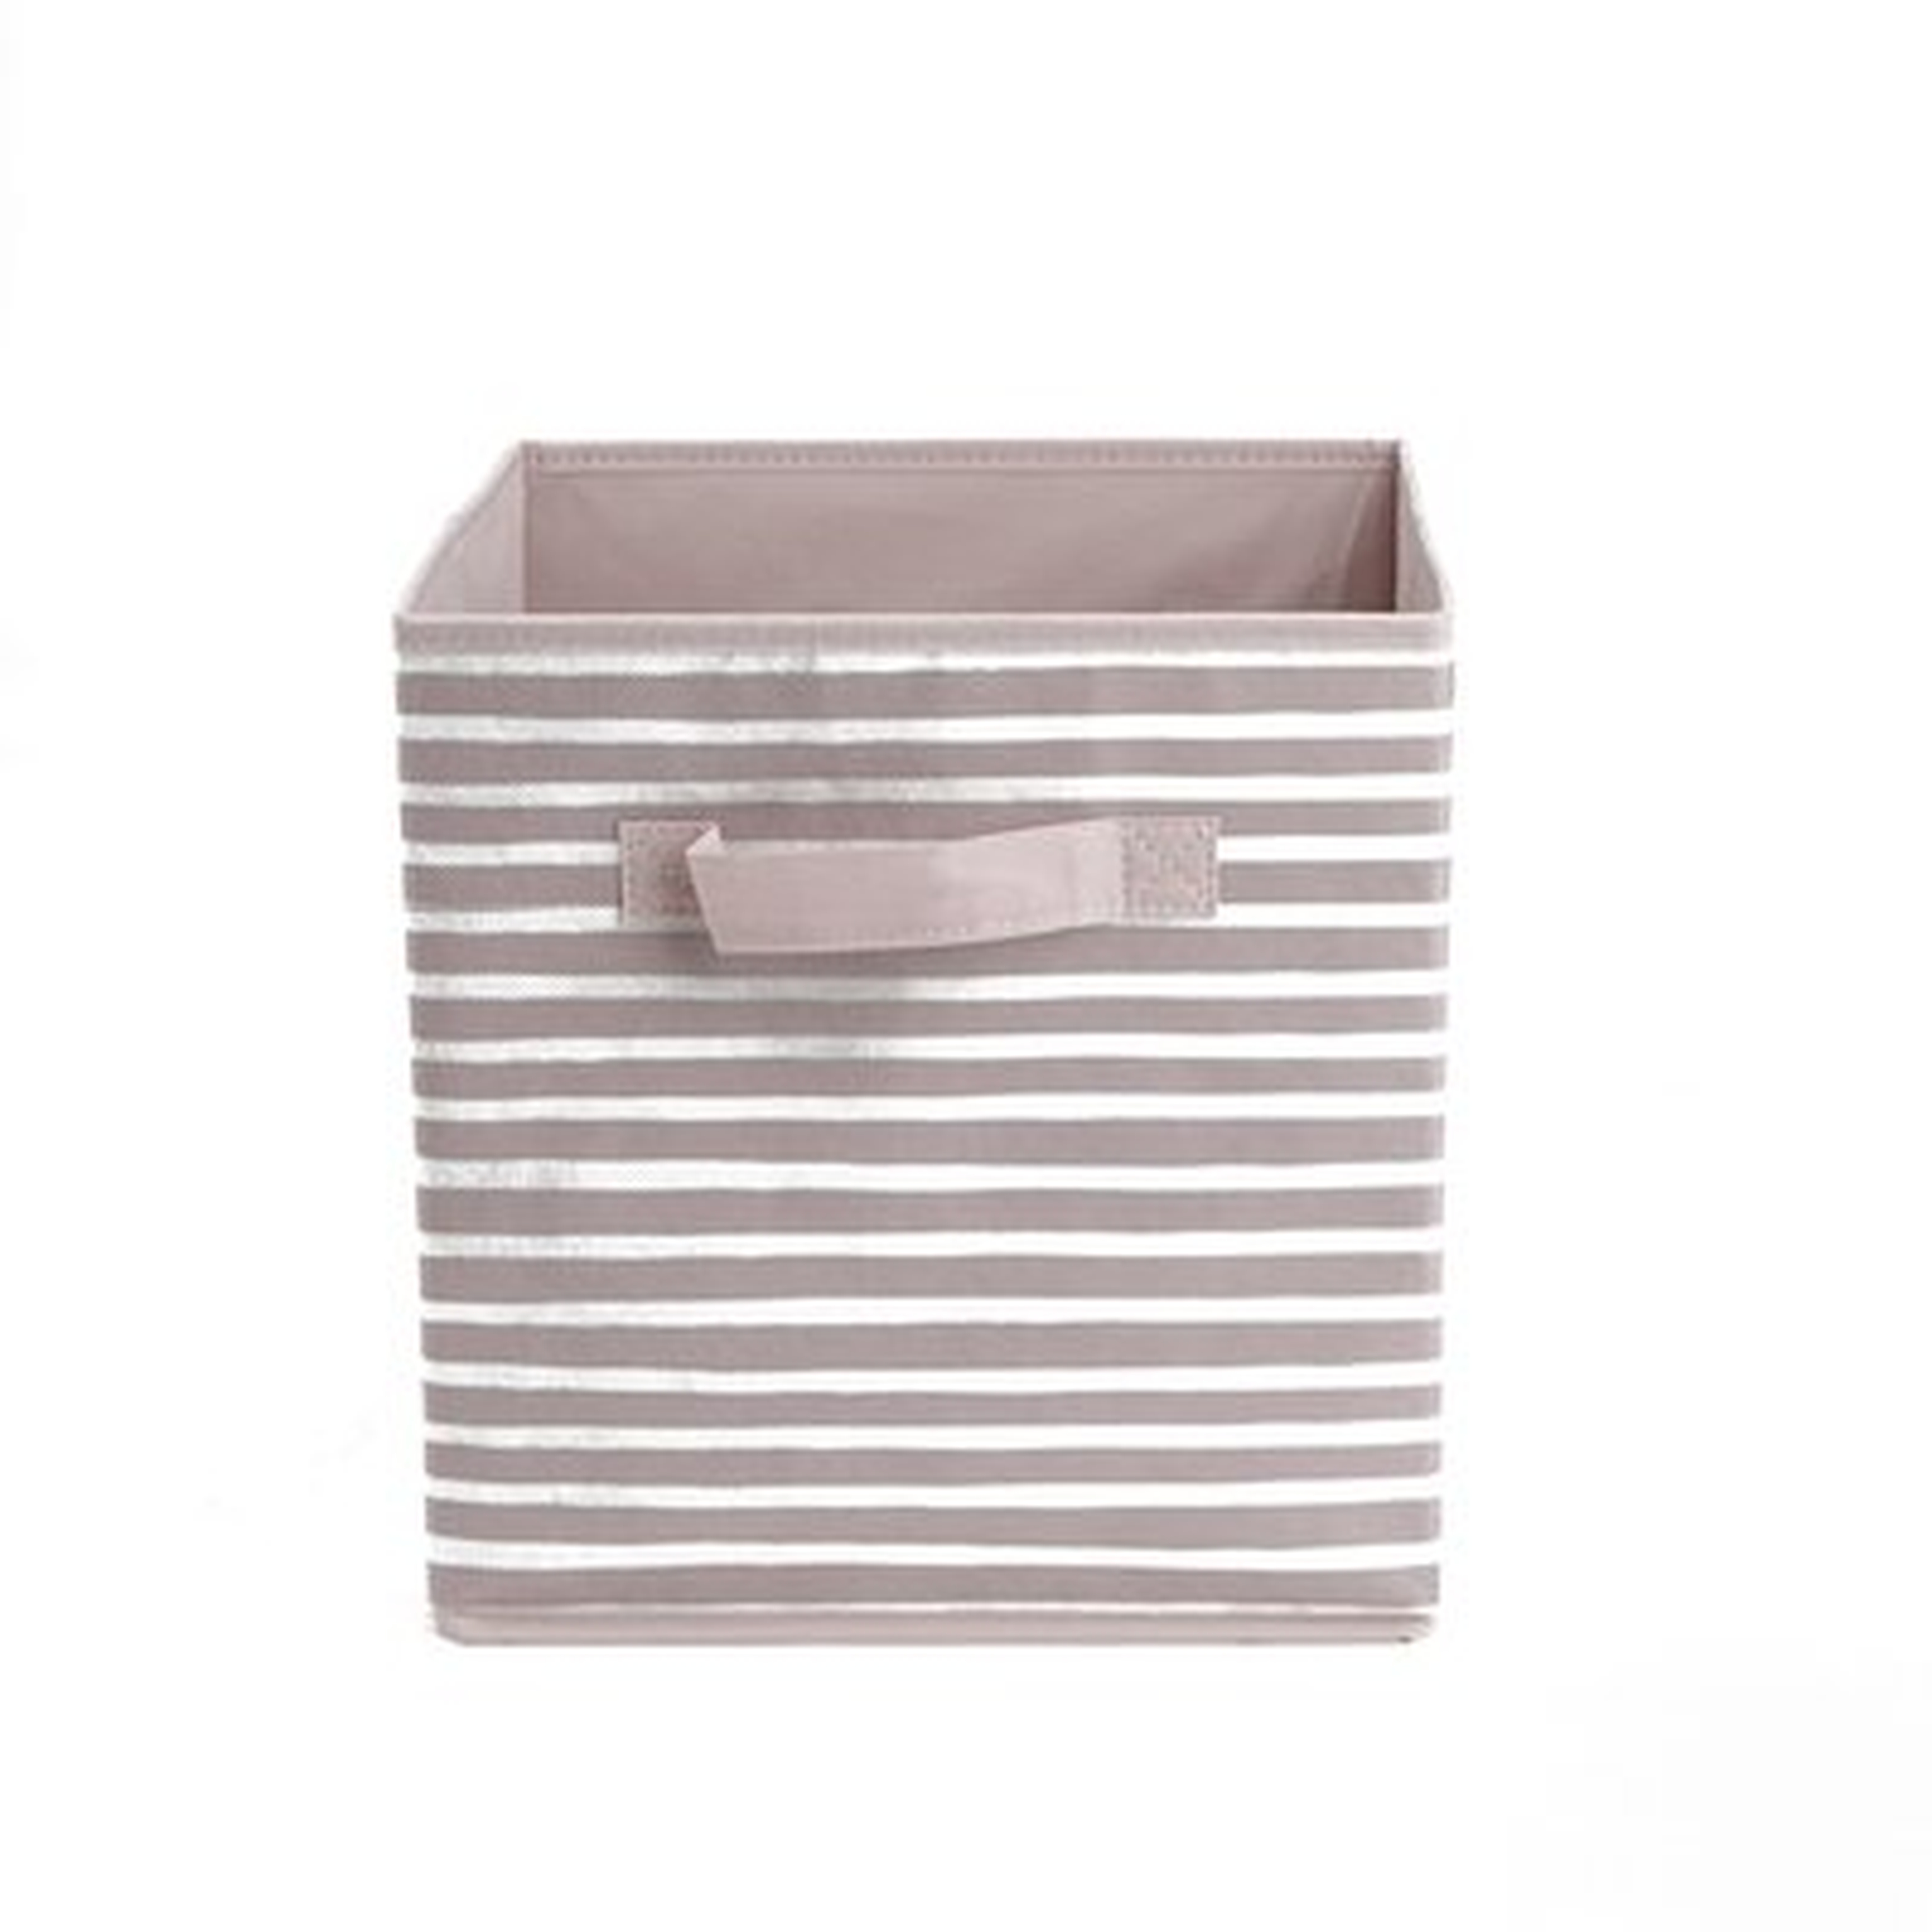 Fabric Storage Cube - Wayfair